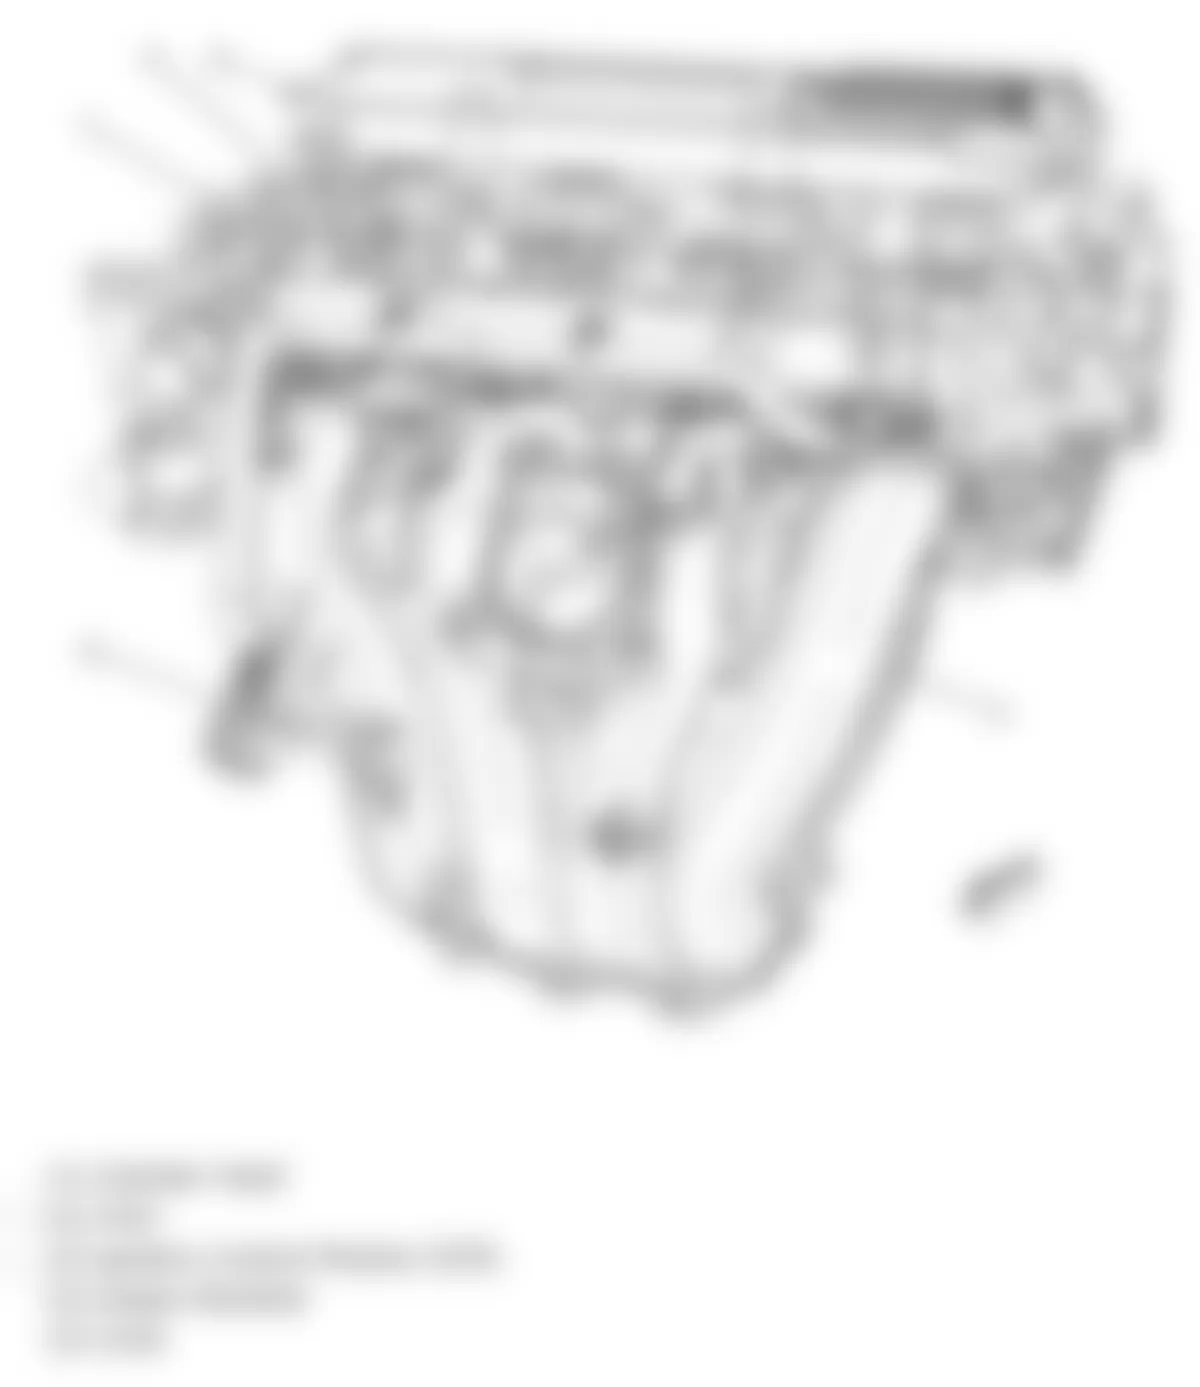 Chevrolet Cobalt LS 2010 - Component Locations -  Engine Assembly (2.2L)